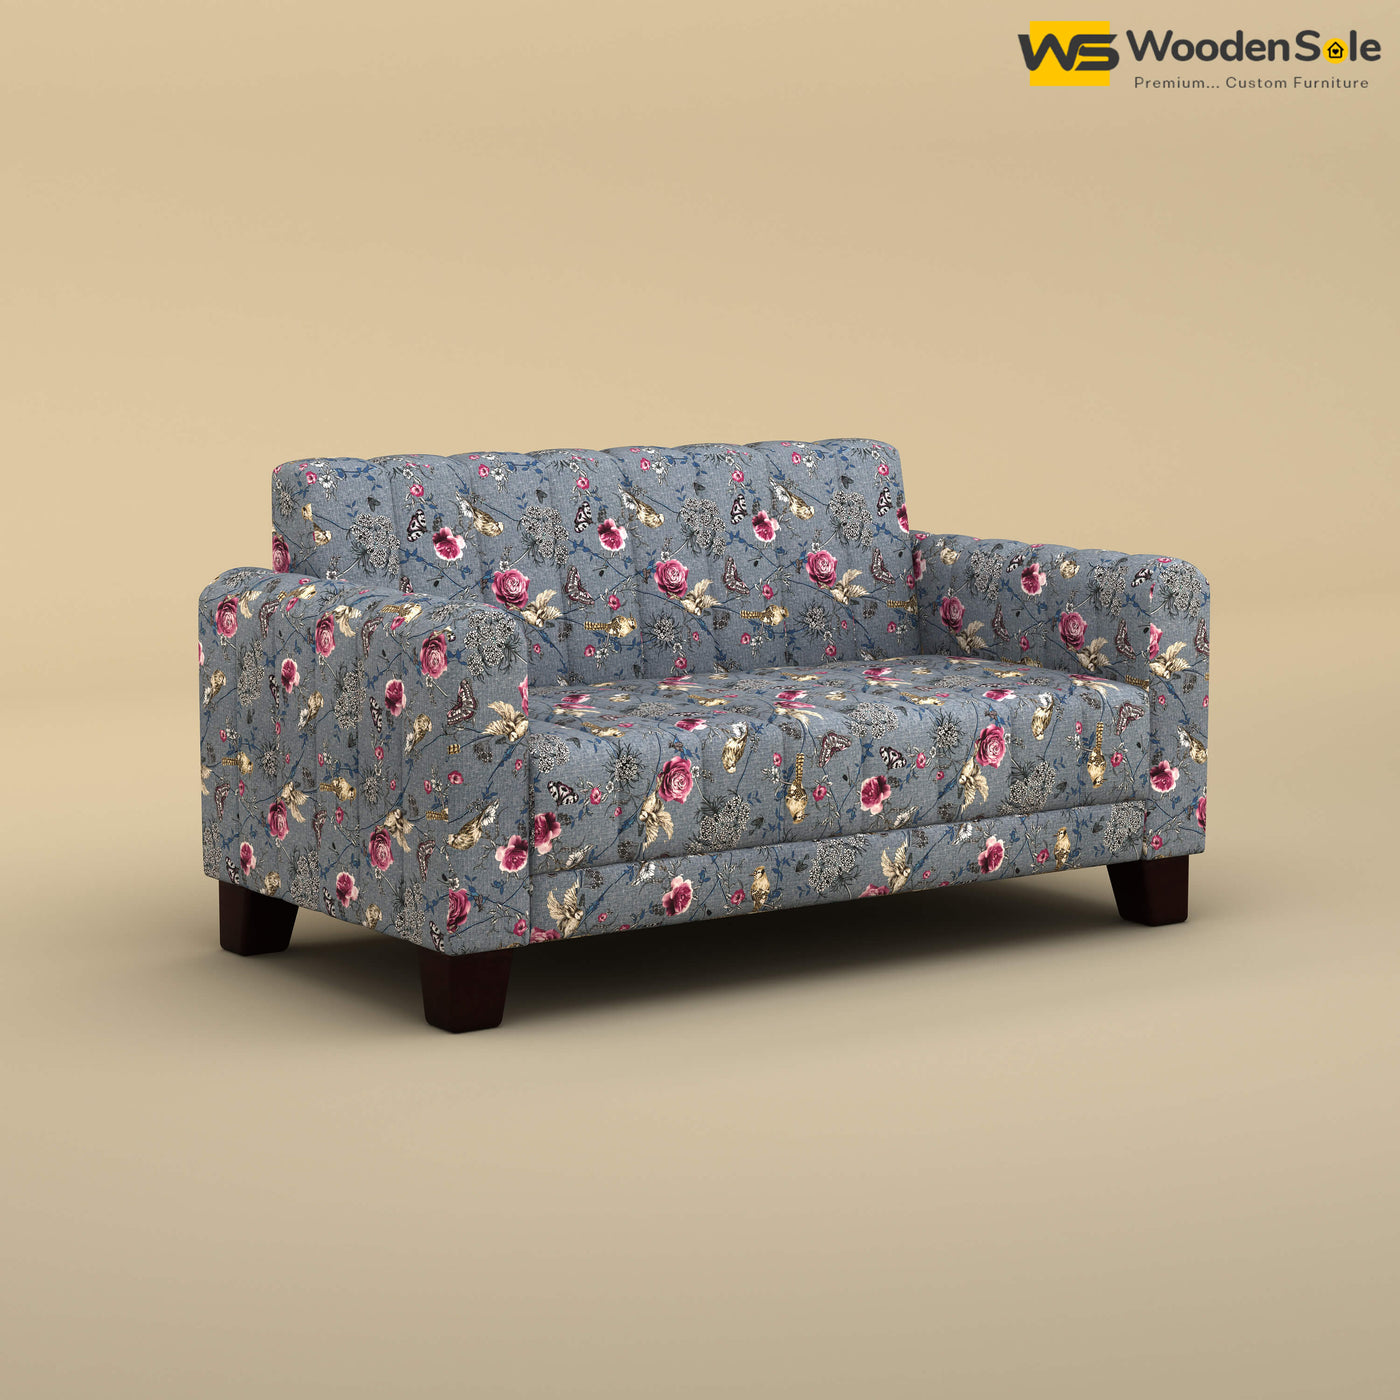 Furo 2 Seater Fabric Sofa (Cotton, Floral Printed)